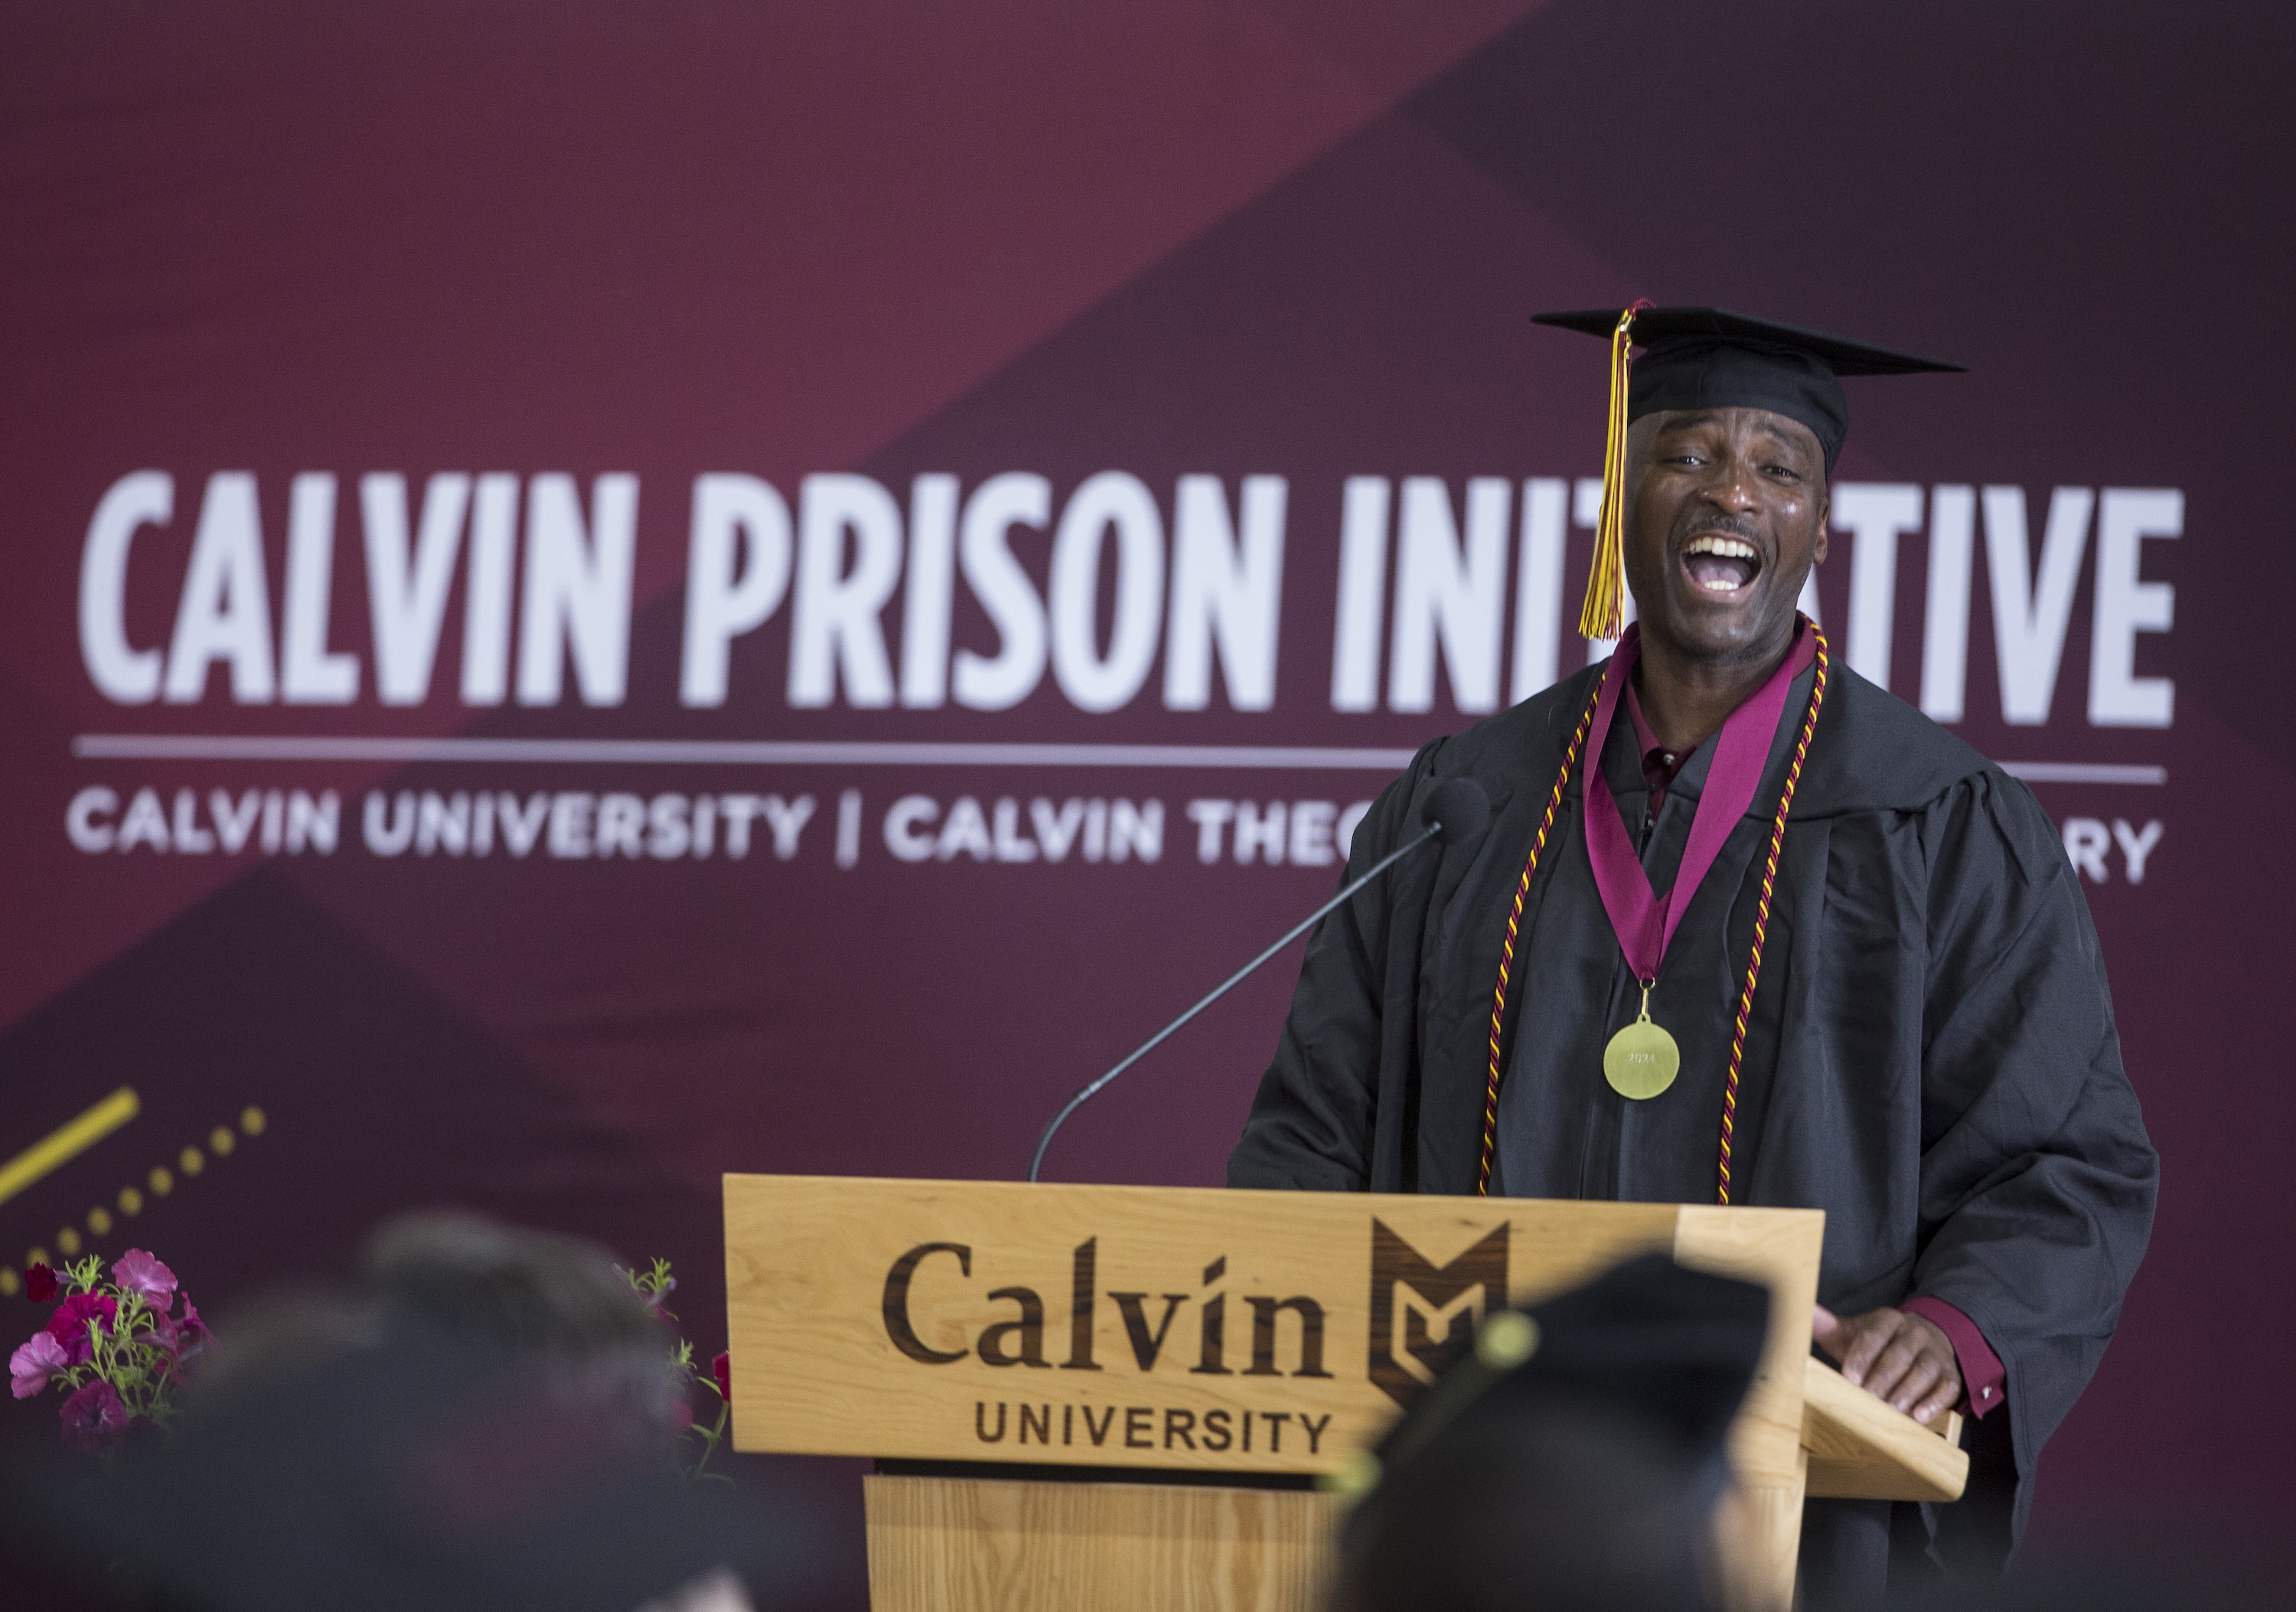 A Calvin Prison Initiative graduate stands at a podium in his graduation cap and gown.